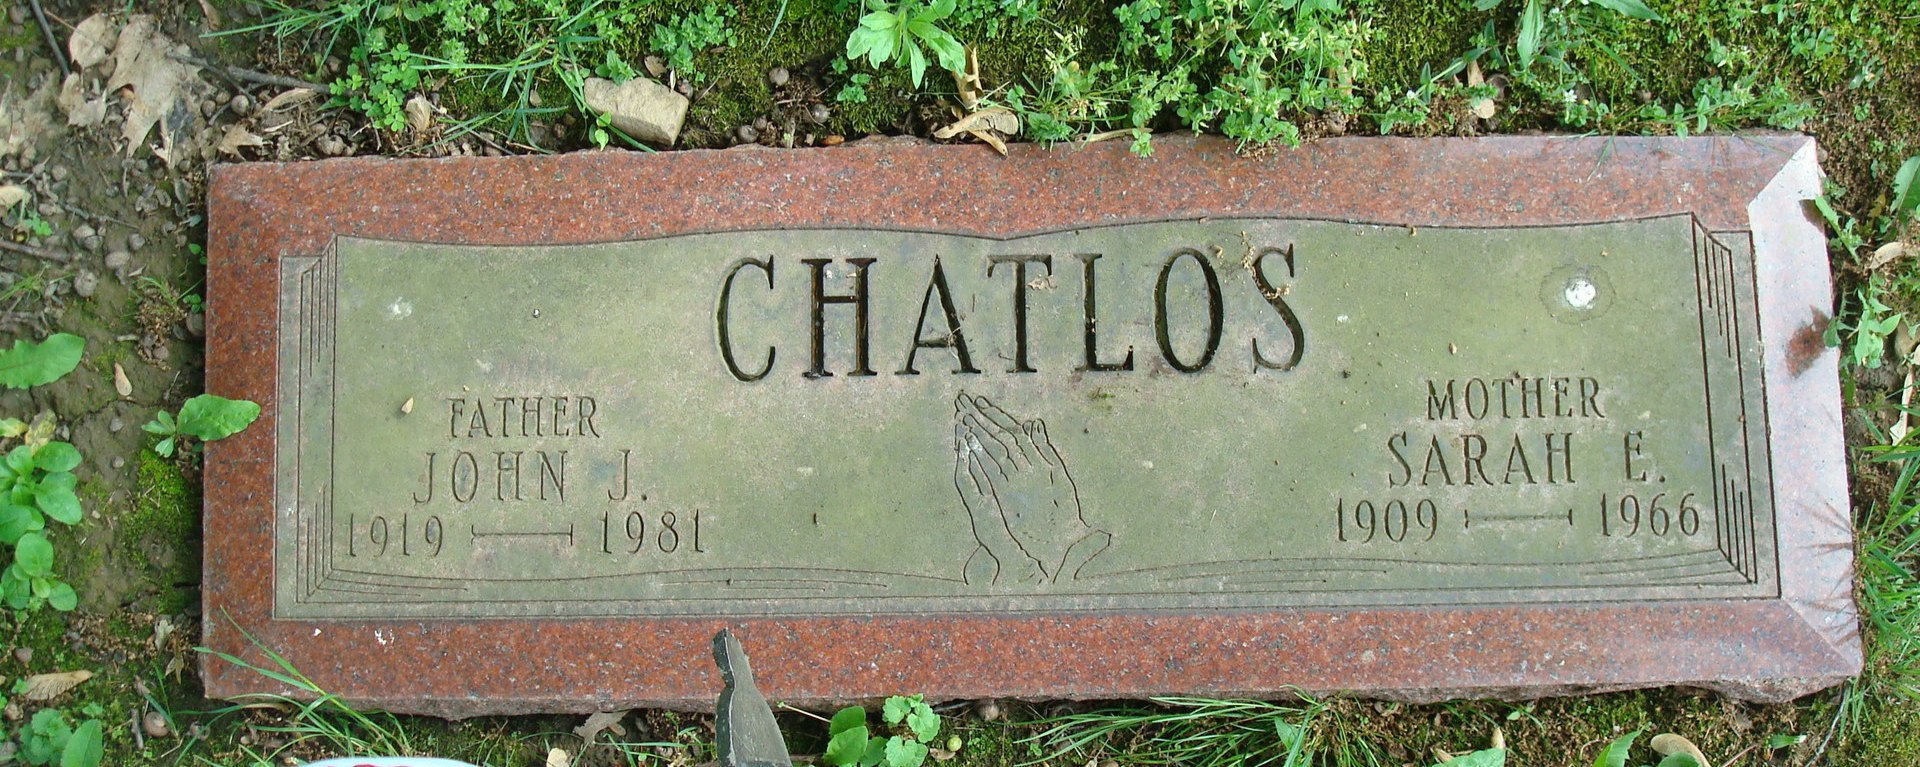 John J. Charlos Gravesite